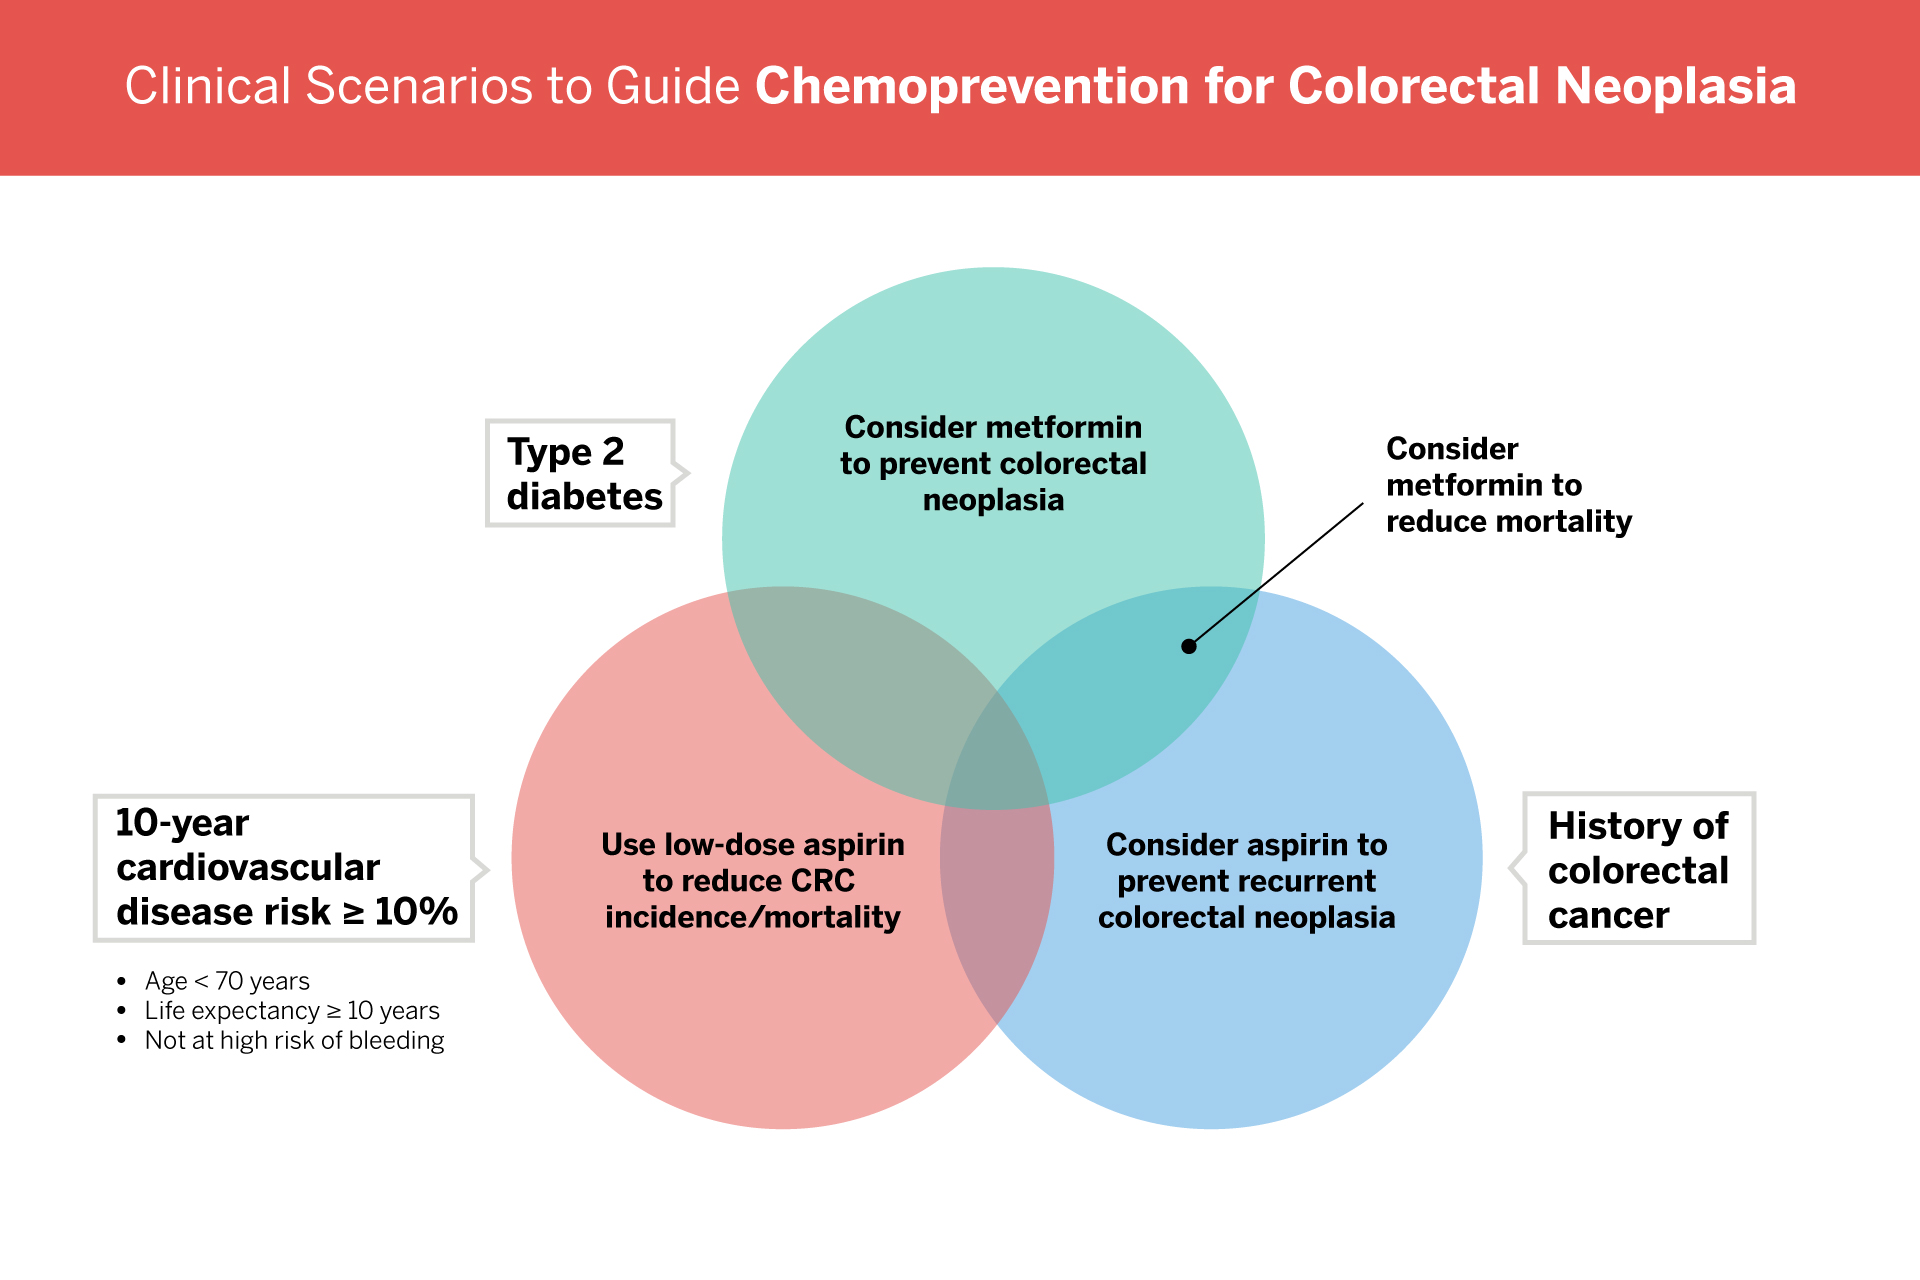 venn diagram detailing clinical scenarios for chemoprevention agents